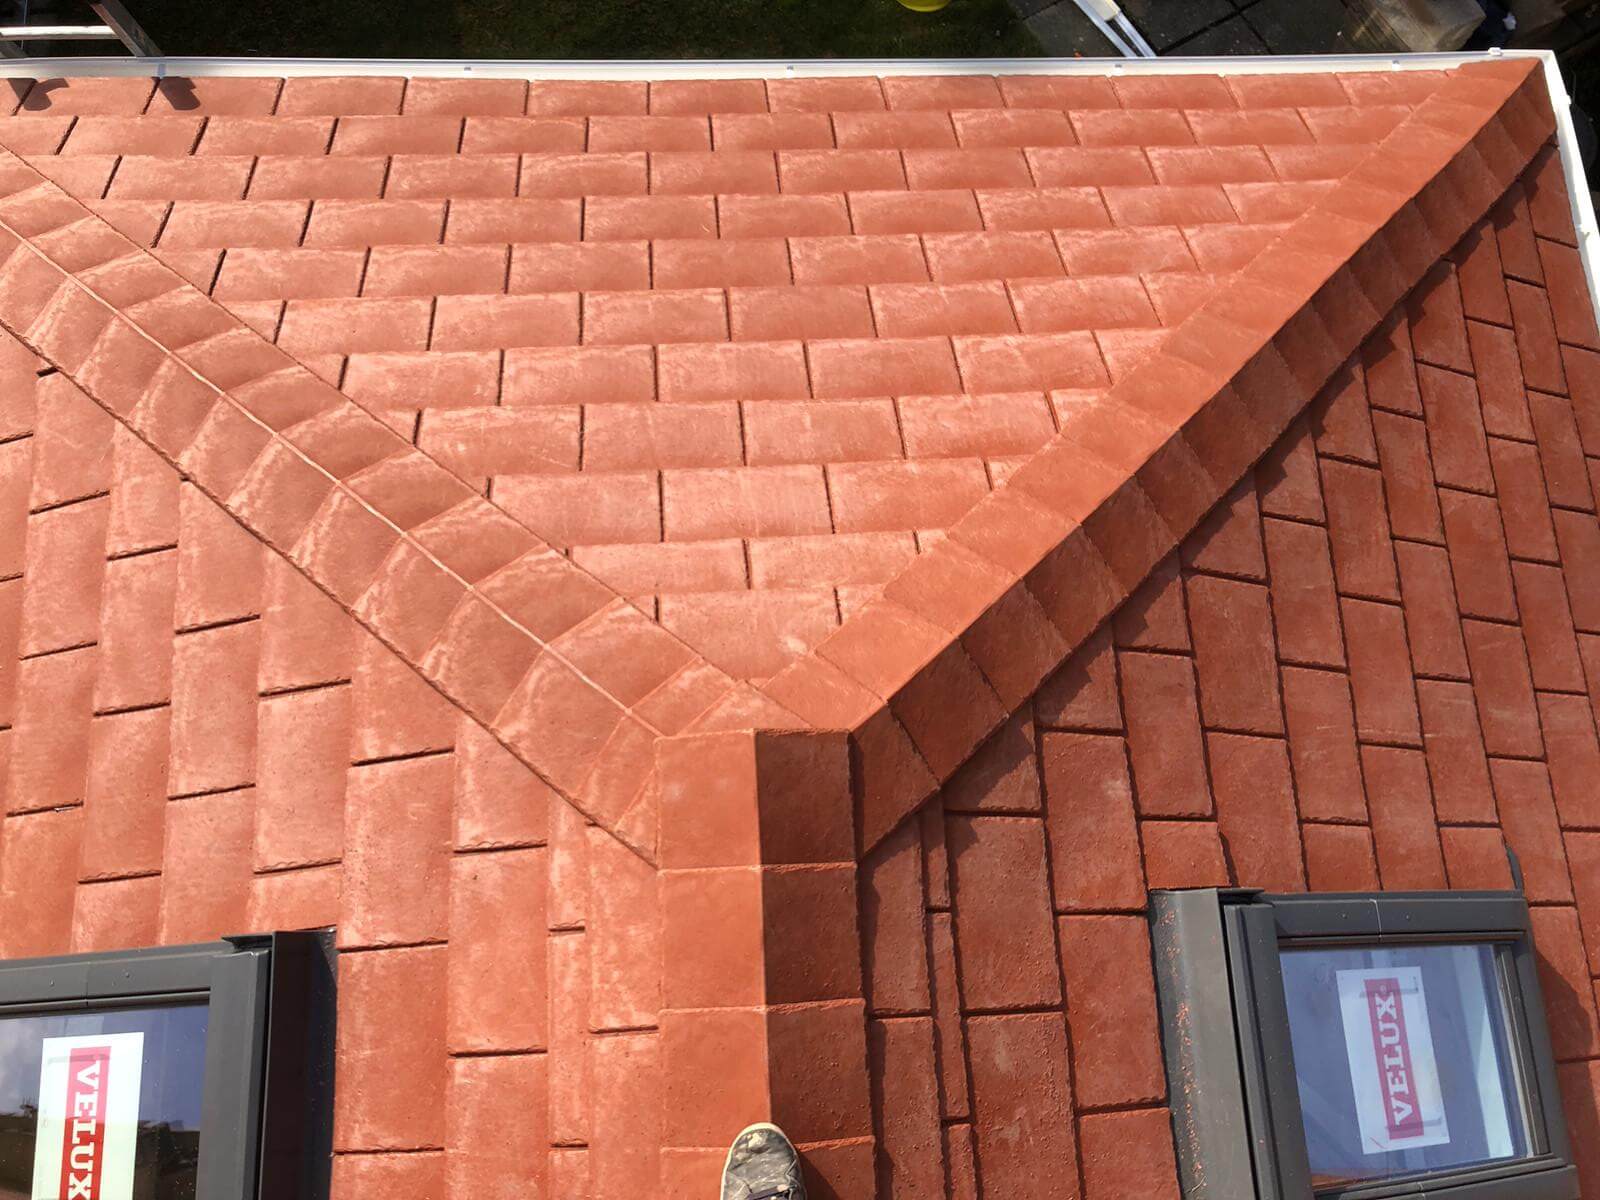 ultraframe tiled roof conservatory reading